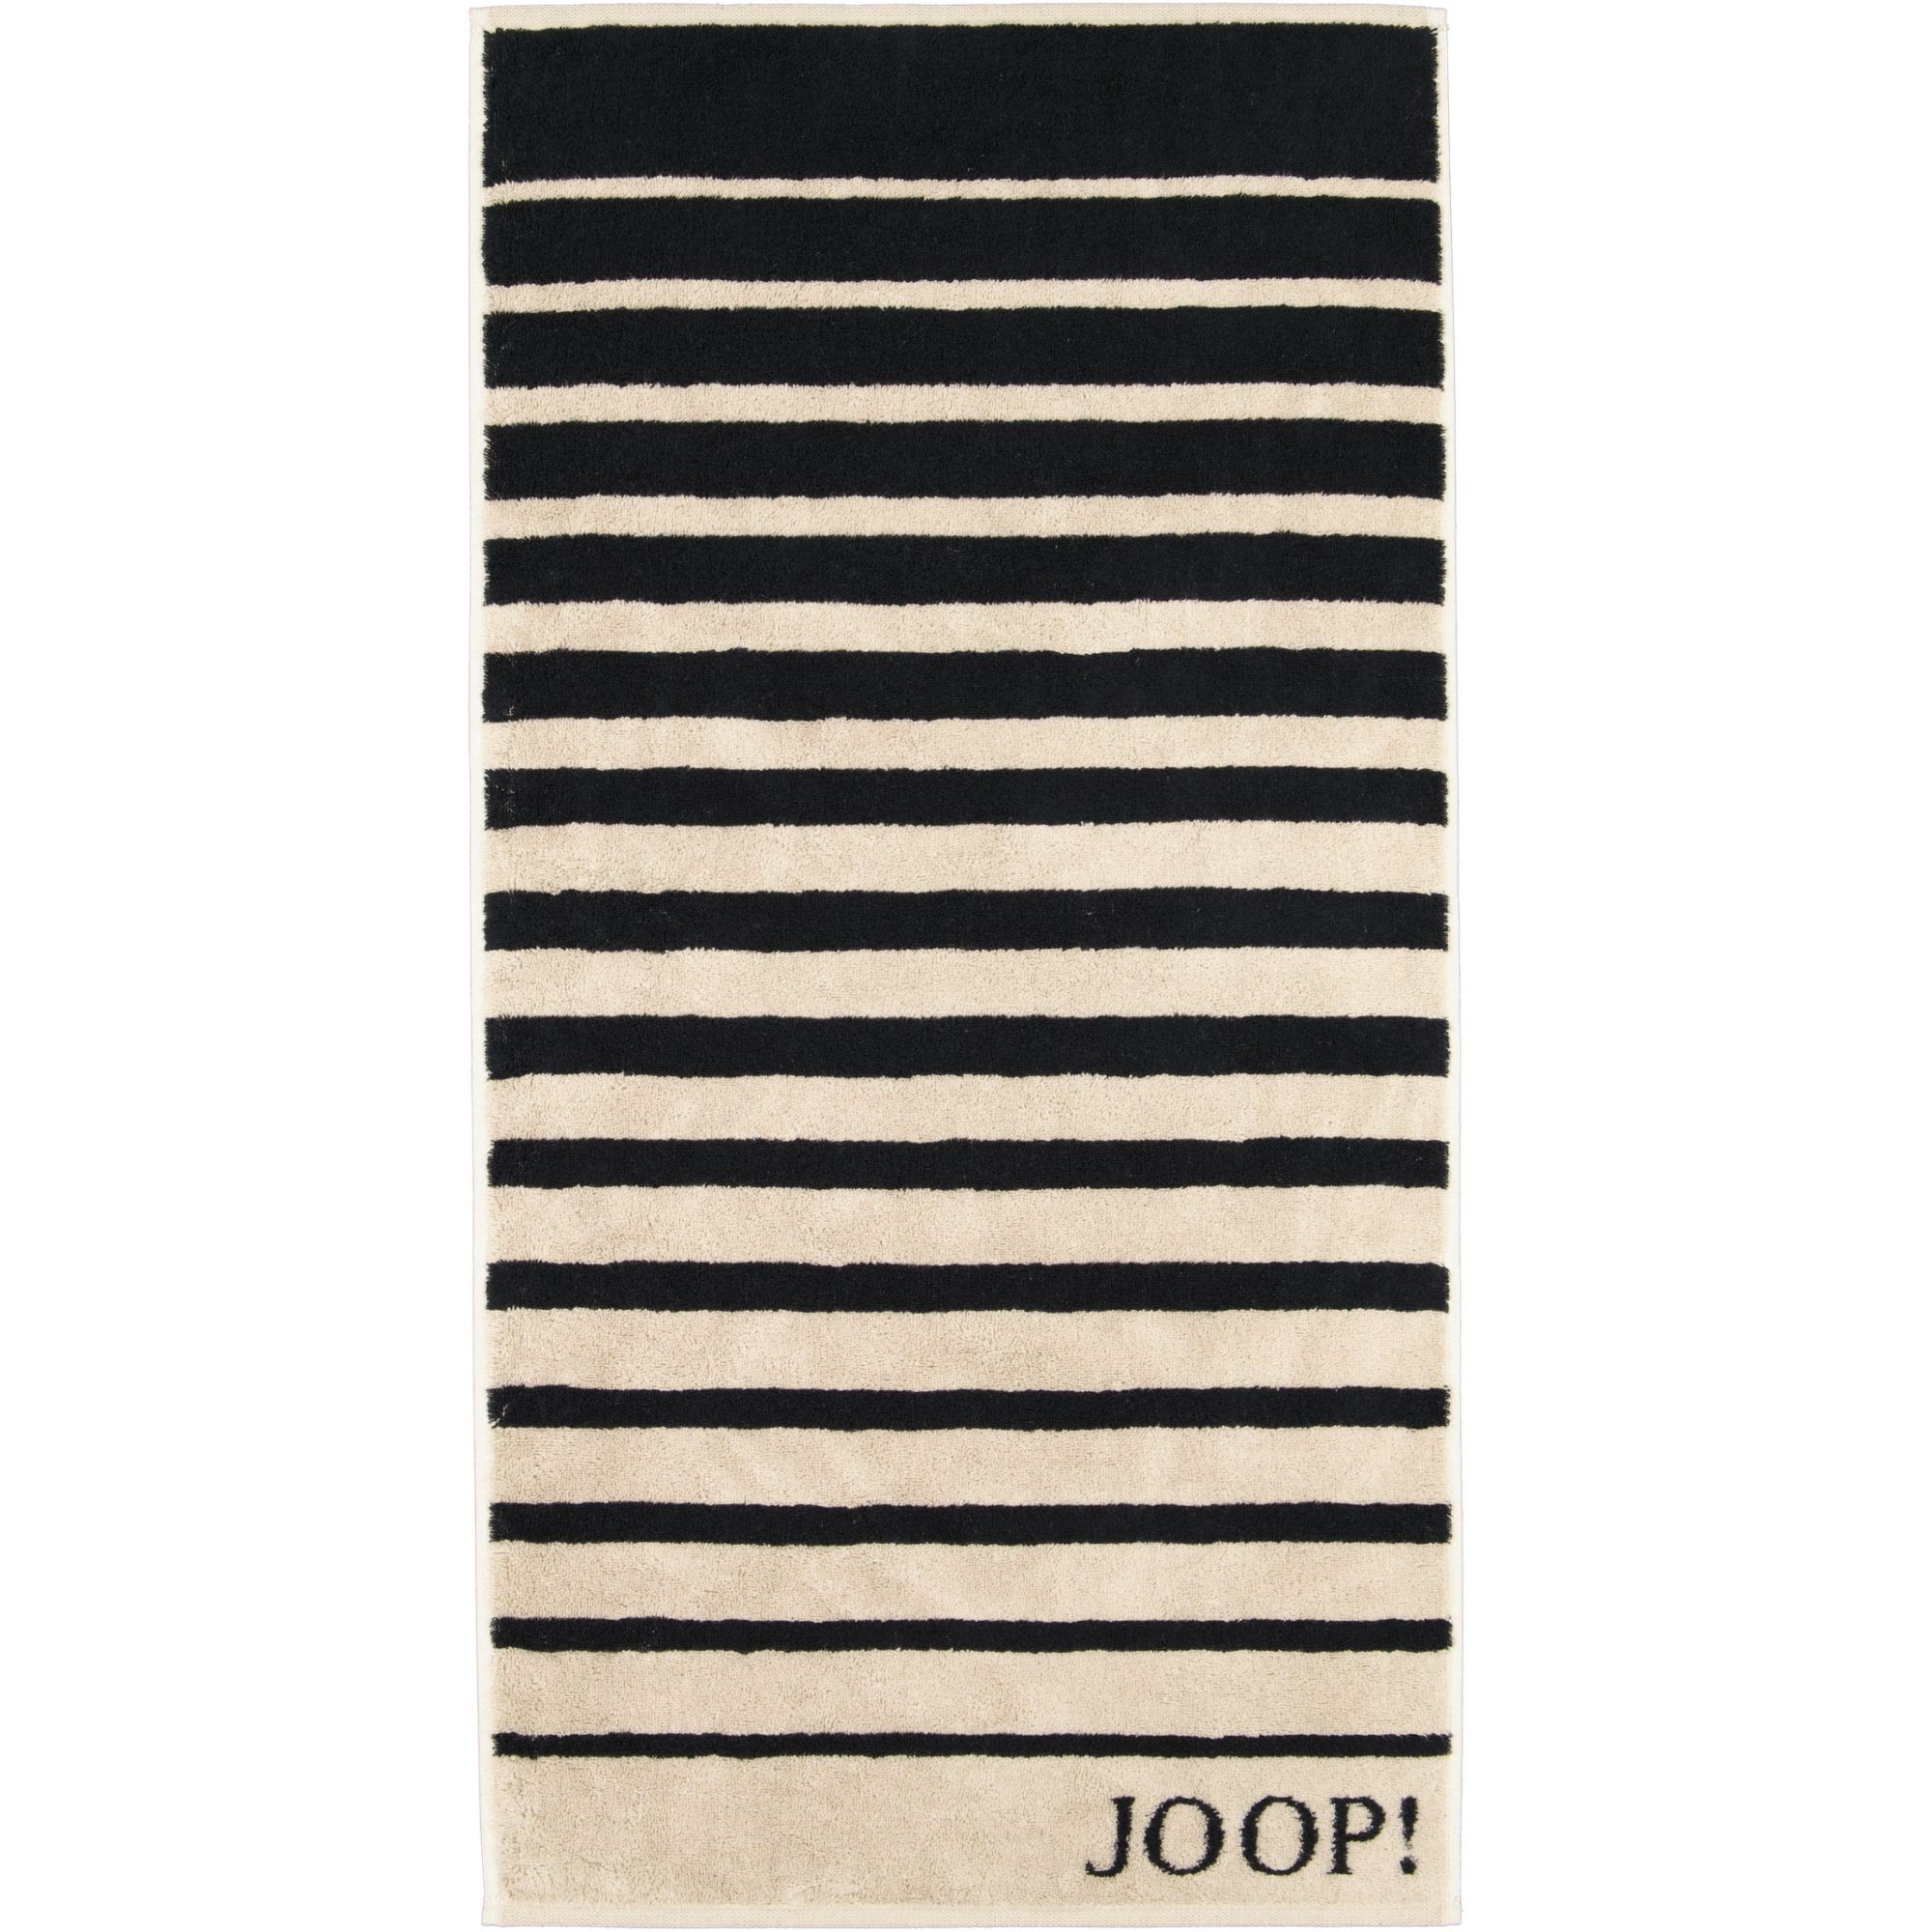 Joop! Handtücher Baumwolle ebony Select 100% Shade 1694